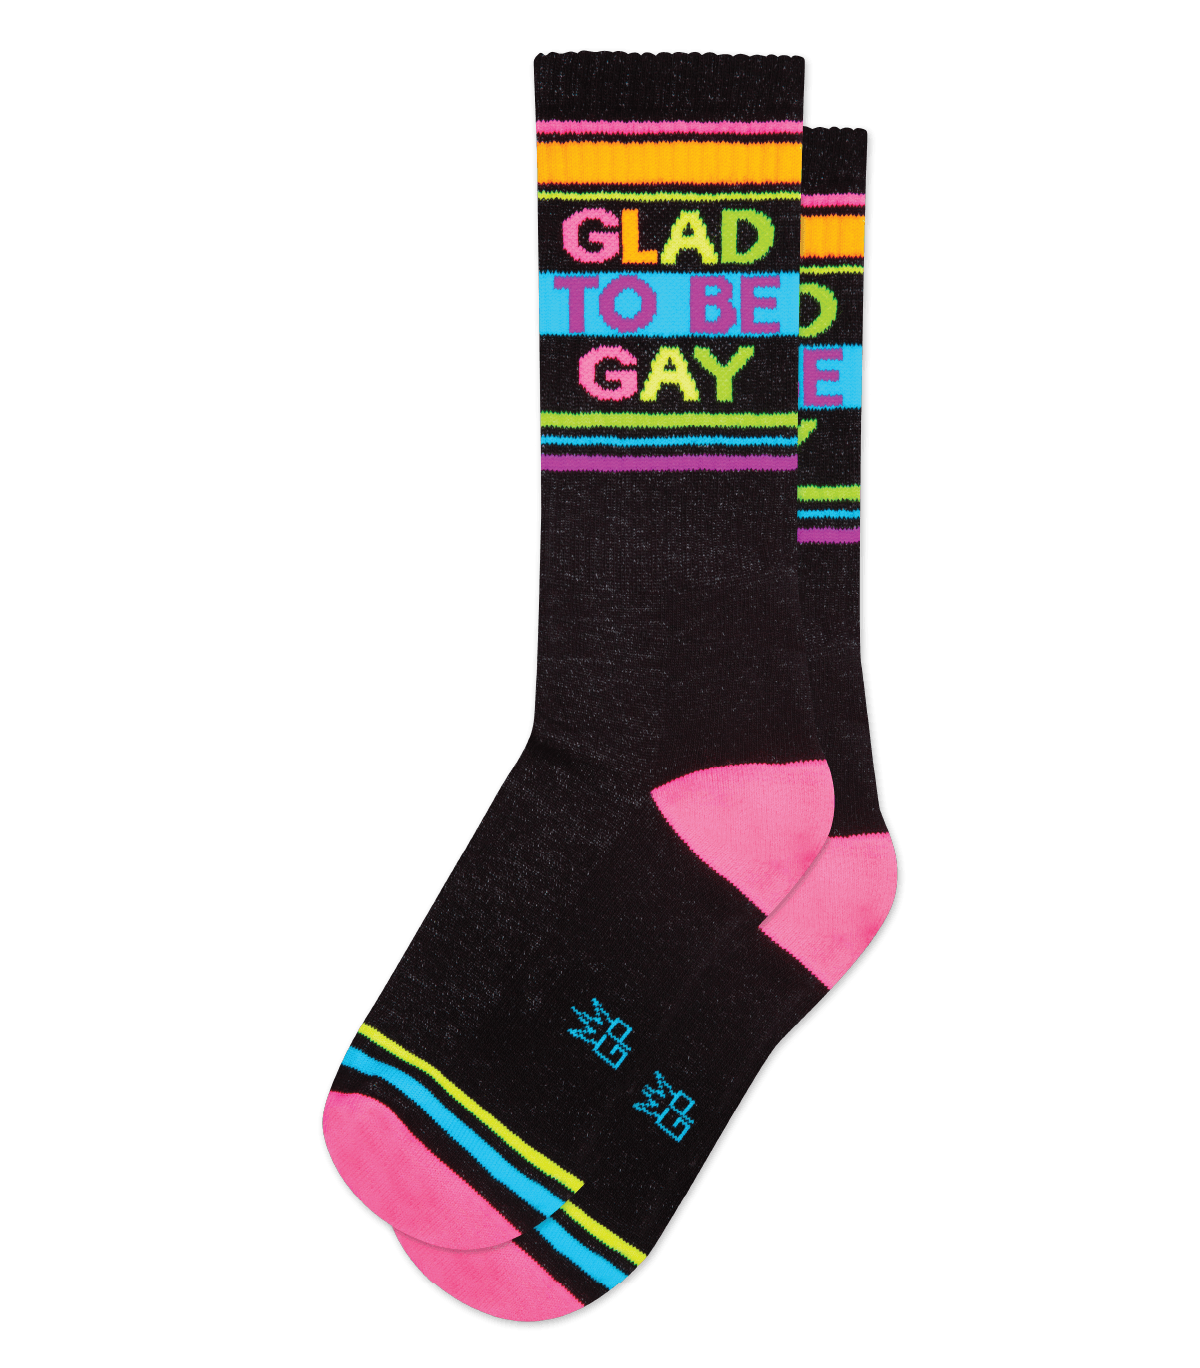 Glad to be Gay Gym Socks